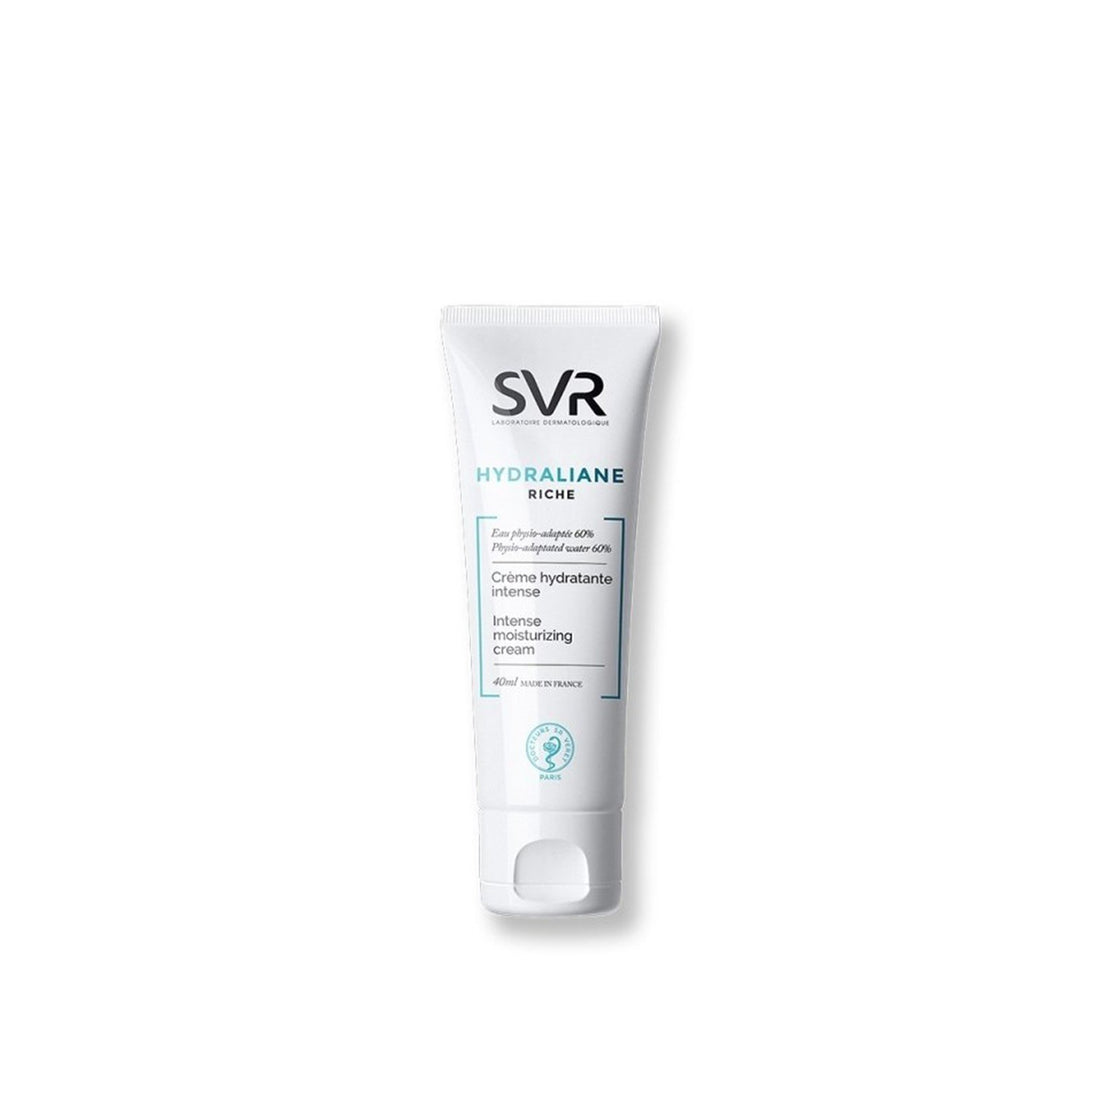 SVR Hydraliane Intense Rich Moisturizing Cream 40ml